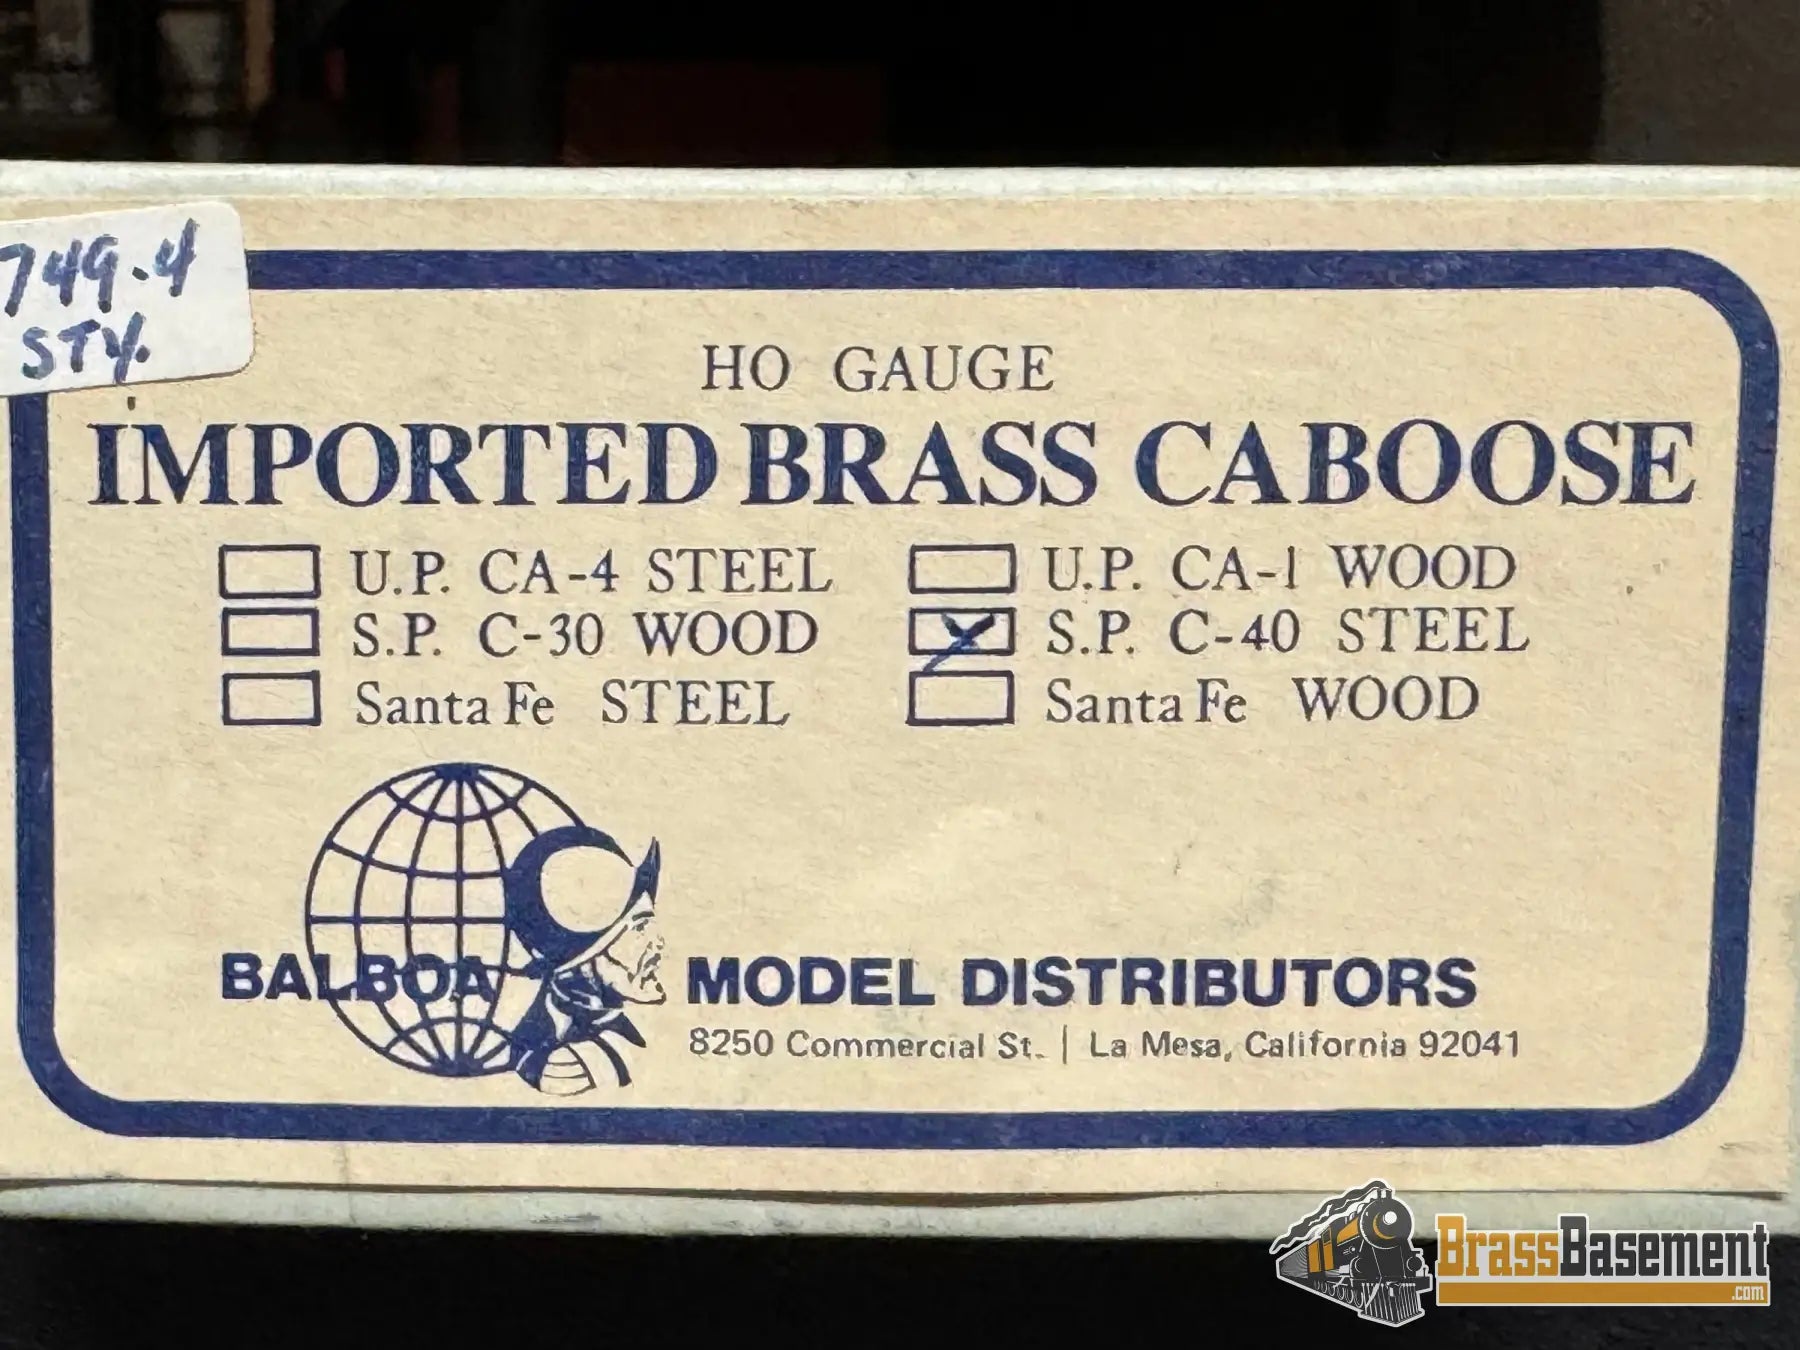 Budget Brass - Balboa Distributors Southern Pacific Sp C - 40 Caboose Nice Custom Paint